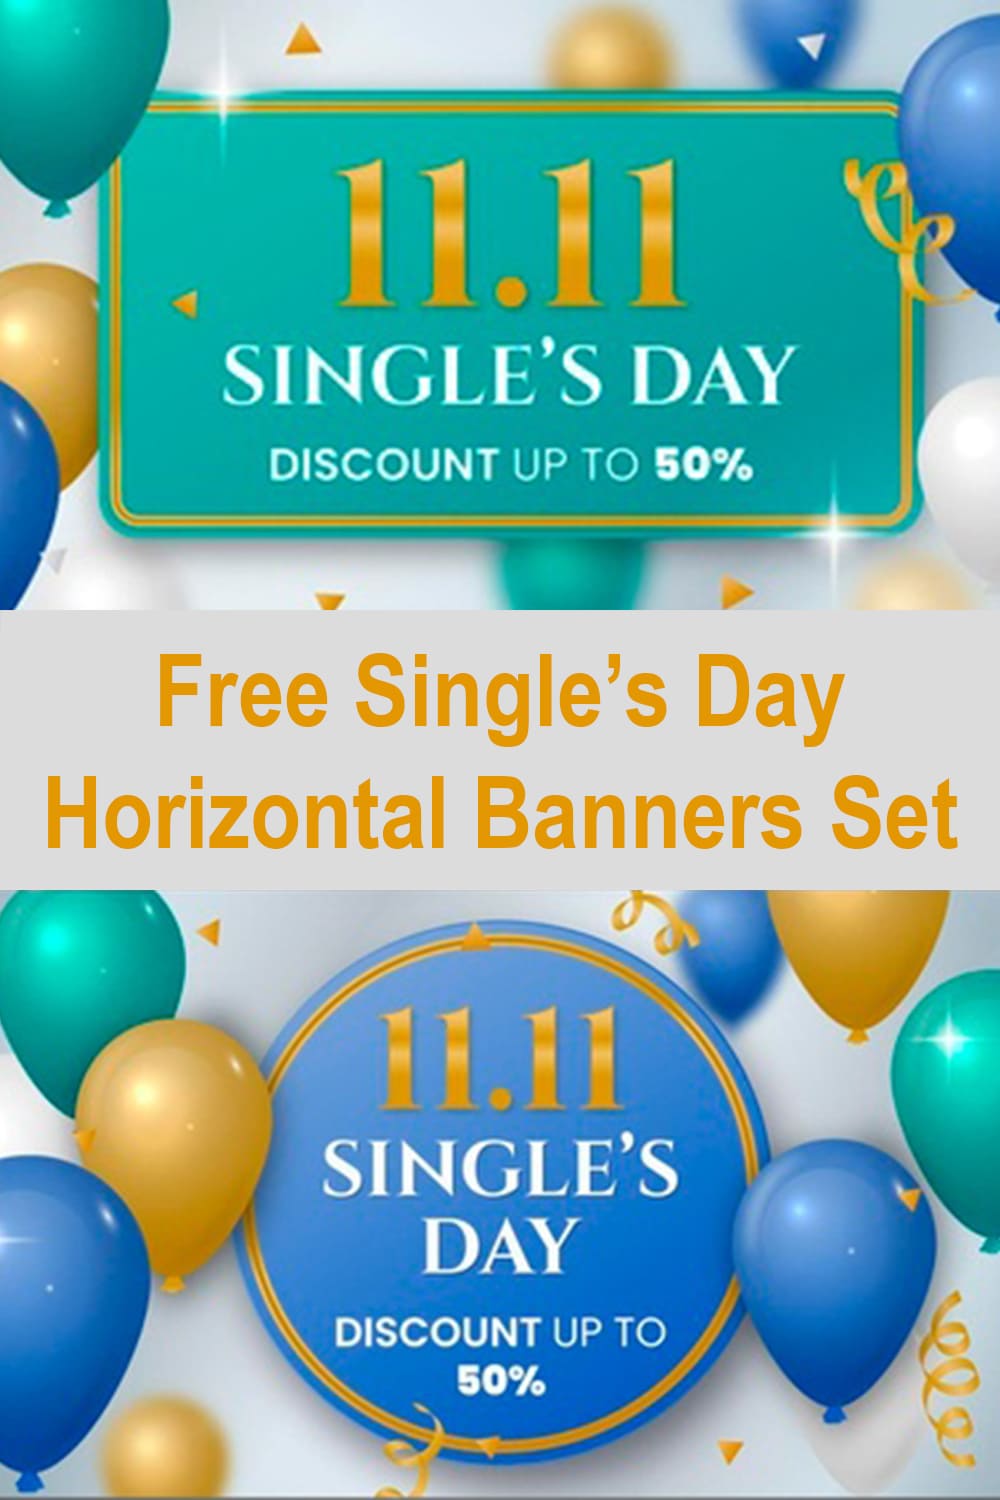 Free Single's Day Horizontal Banners Set Pinterest.